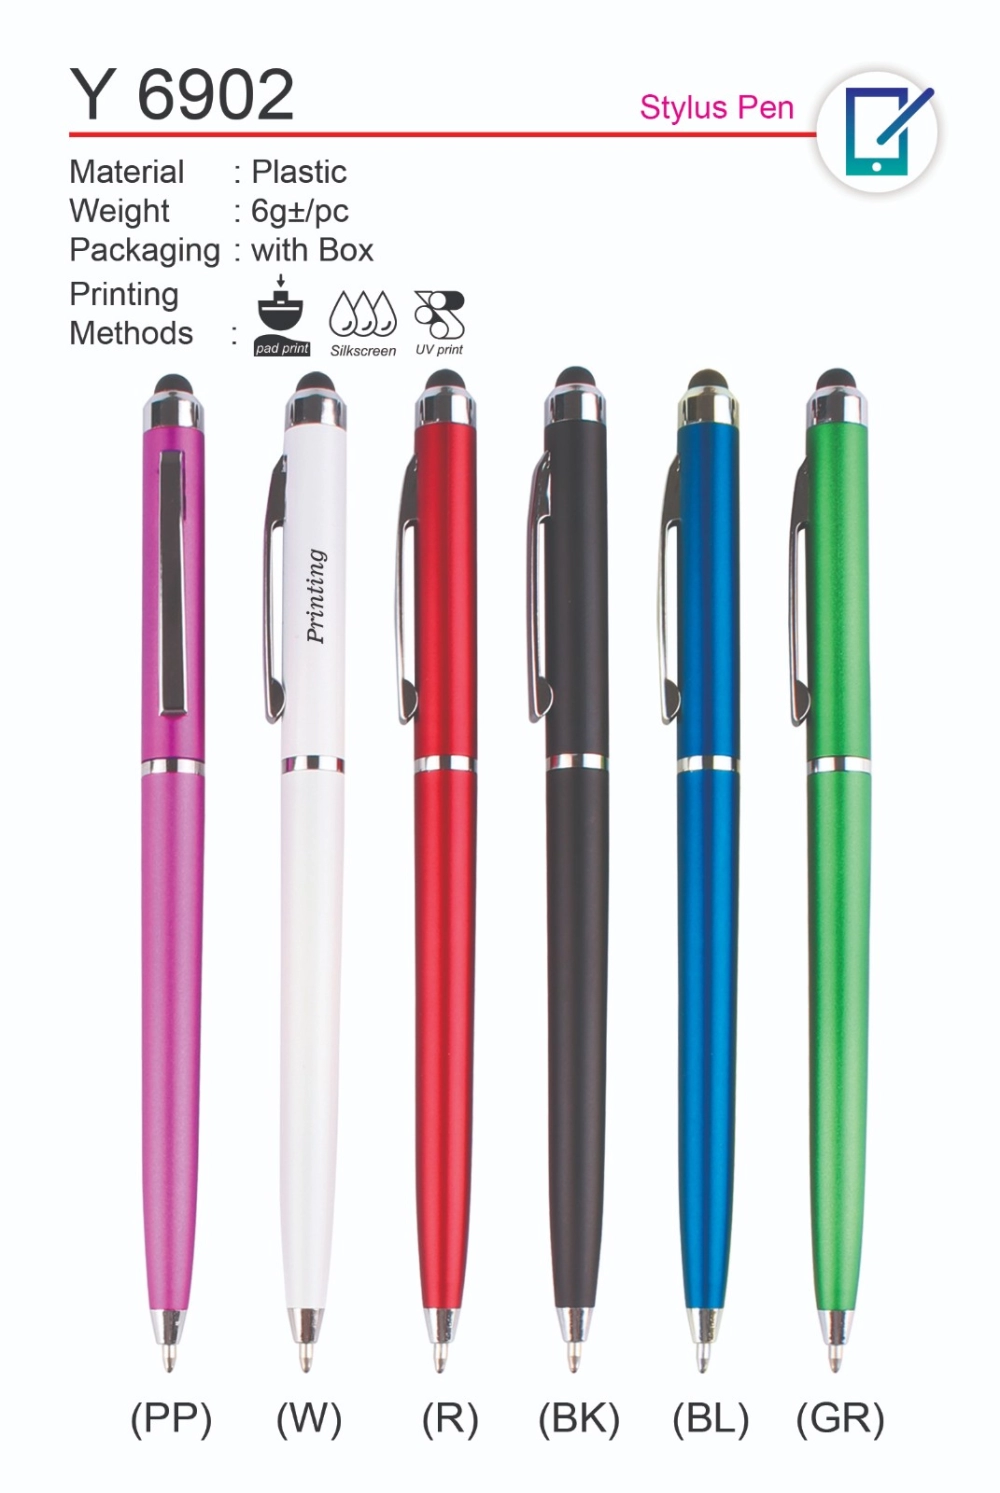 Y 6902 Plastic Pen (Stylus Pen) (A)